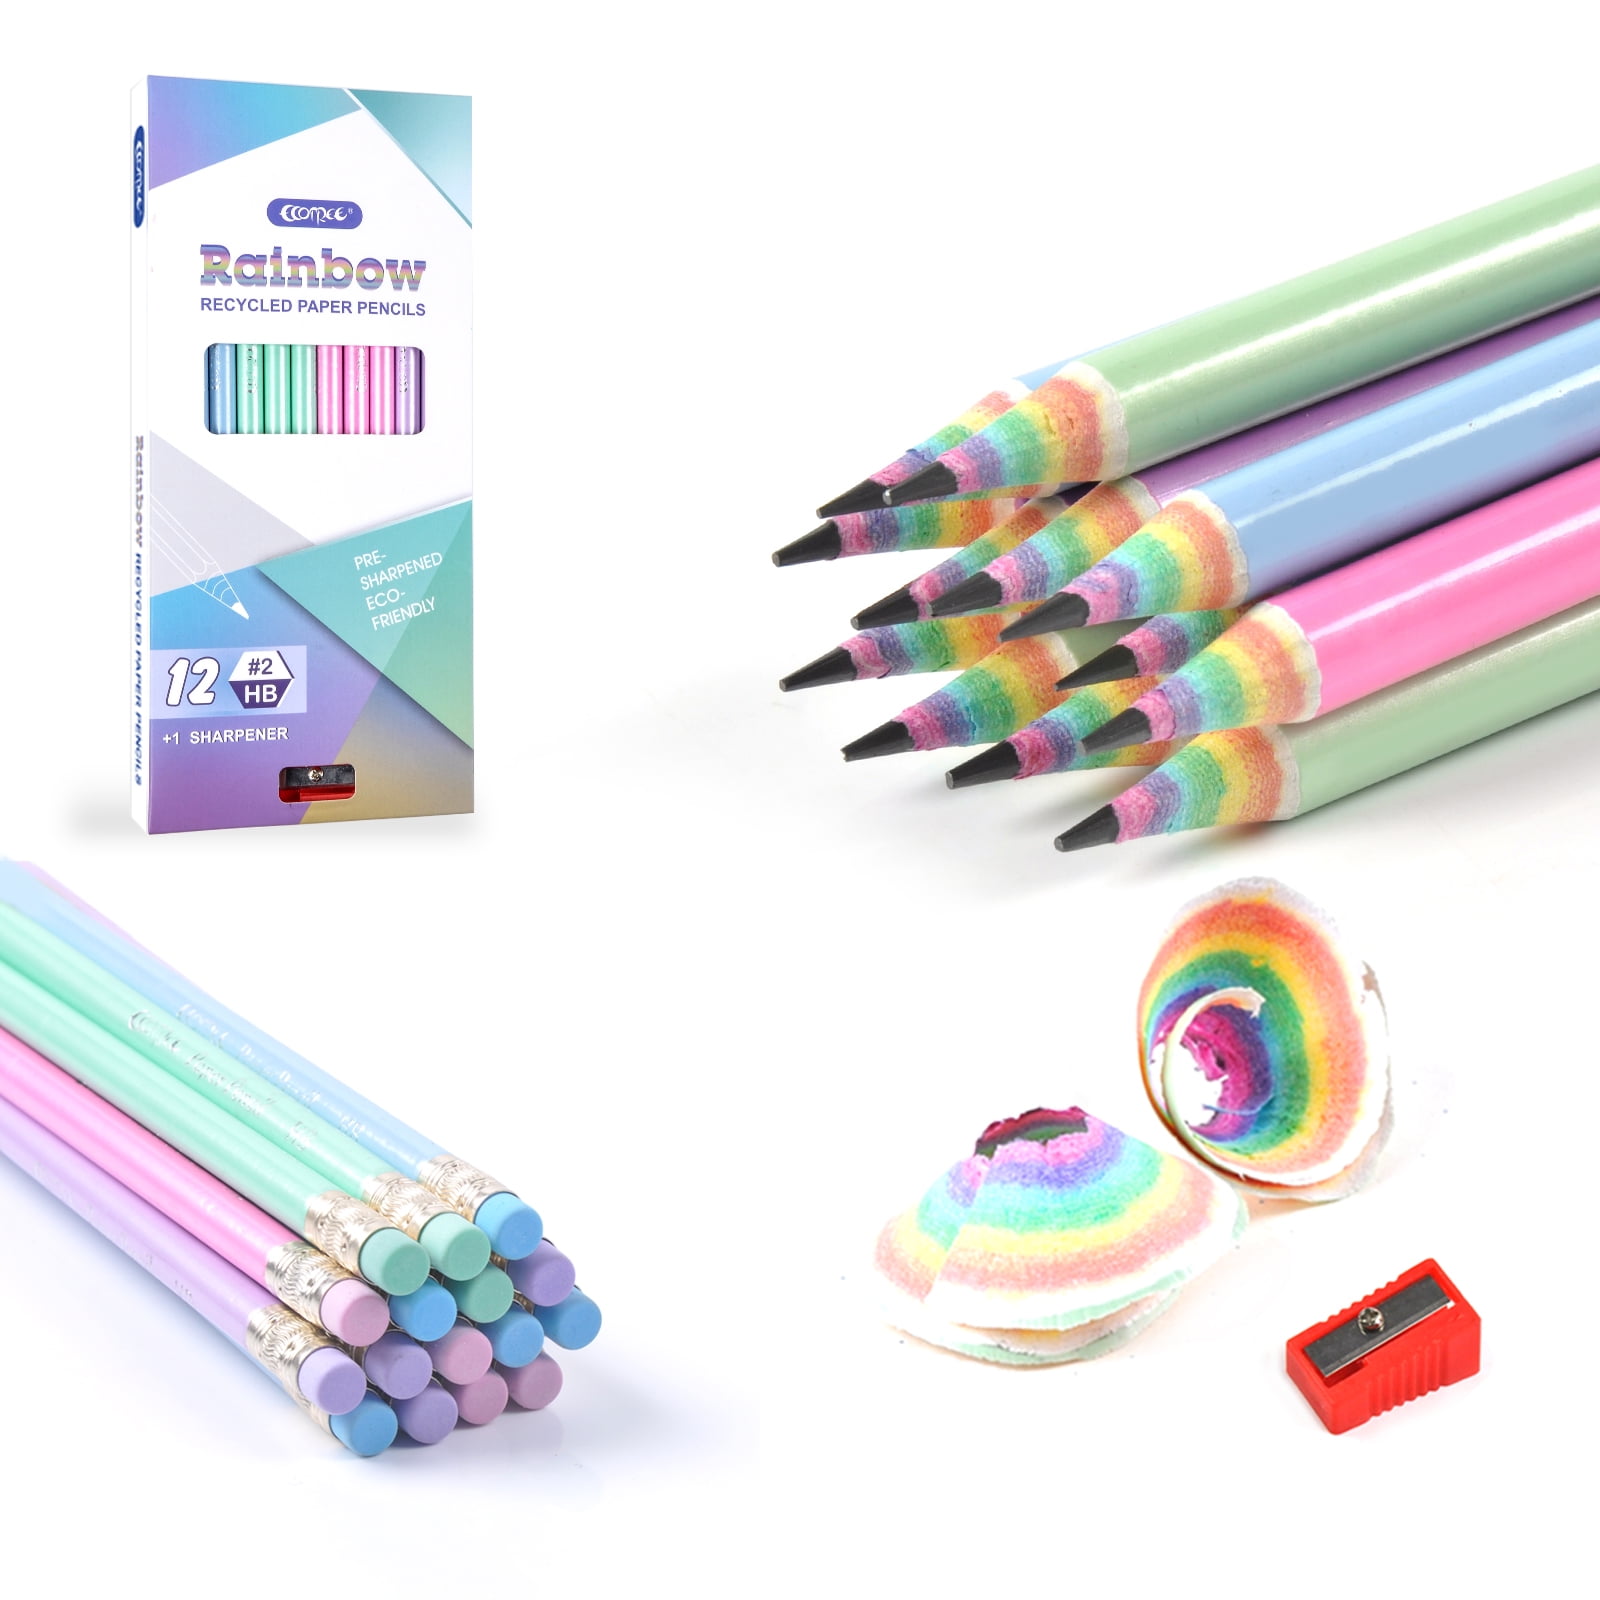 ECOTREE Pencils #2 HB, Pre-sharpened Pencils with Eraser Cute Pencils  Graphite Pencils Sketch Pencils Birthday Pencils for Kids, Adults, School